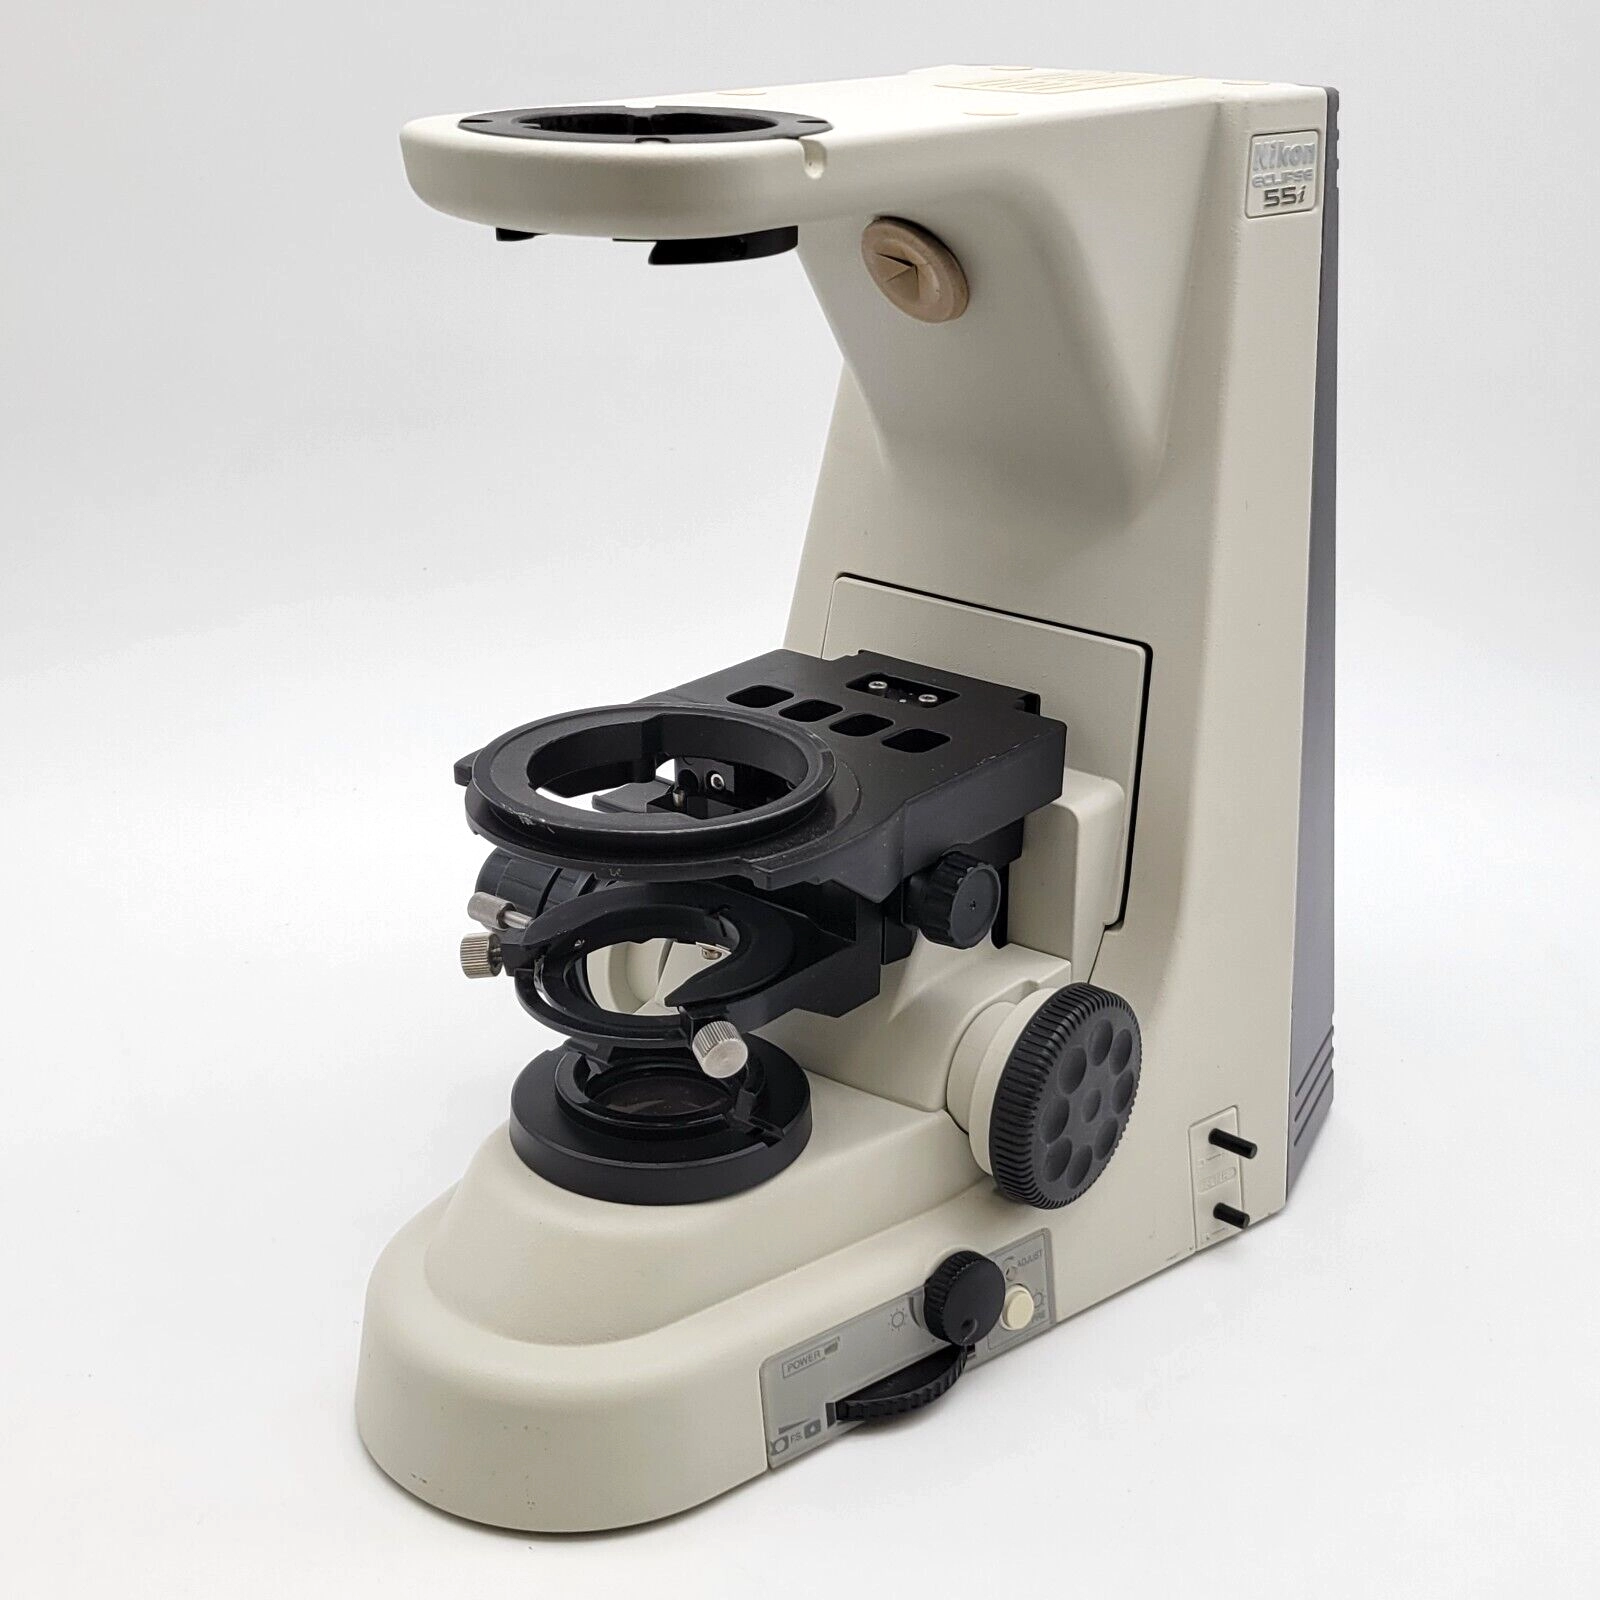 Nikon Microscope 55i Eclipse Stand